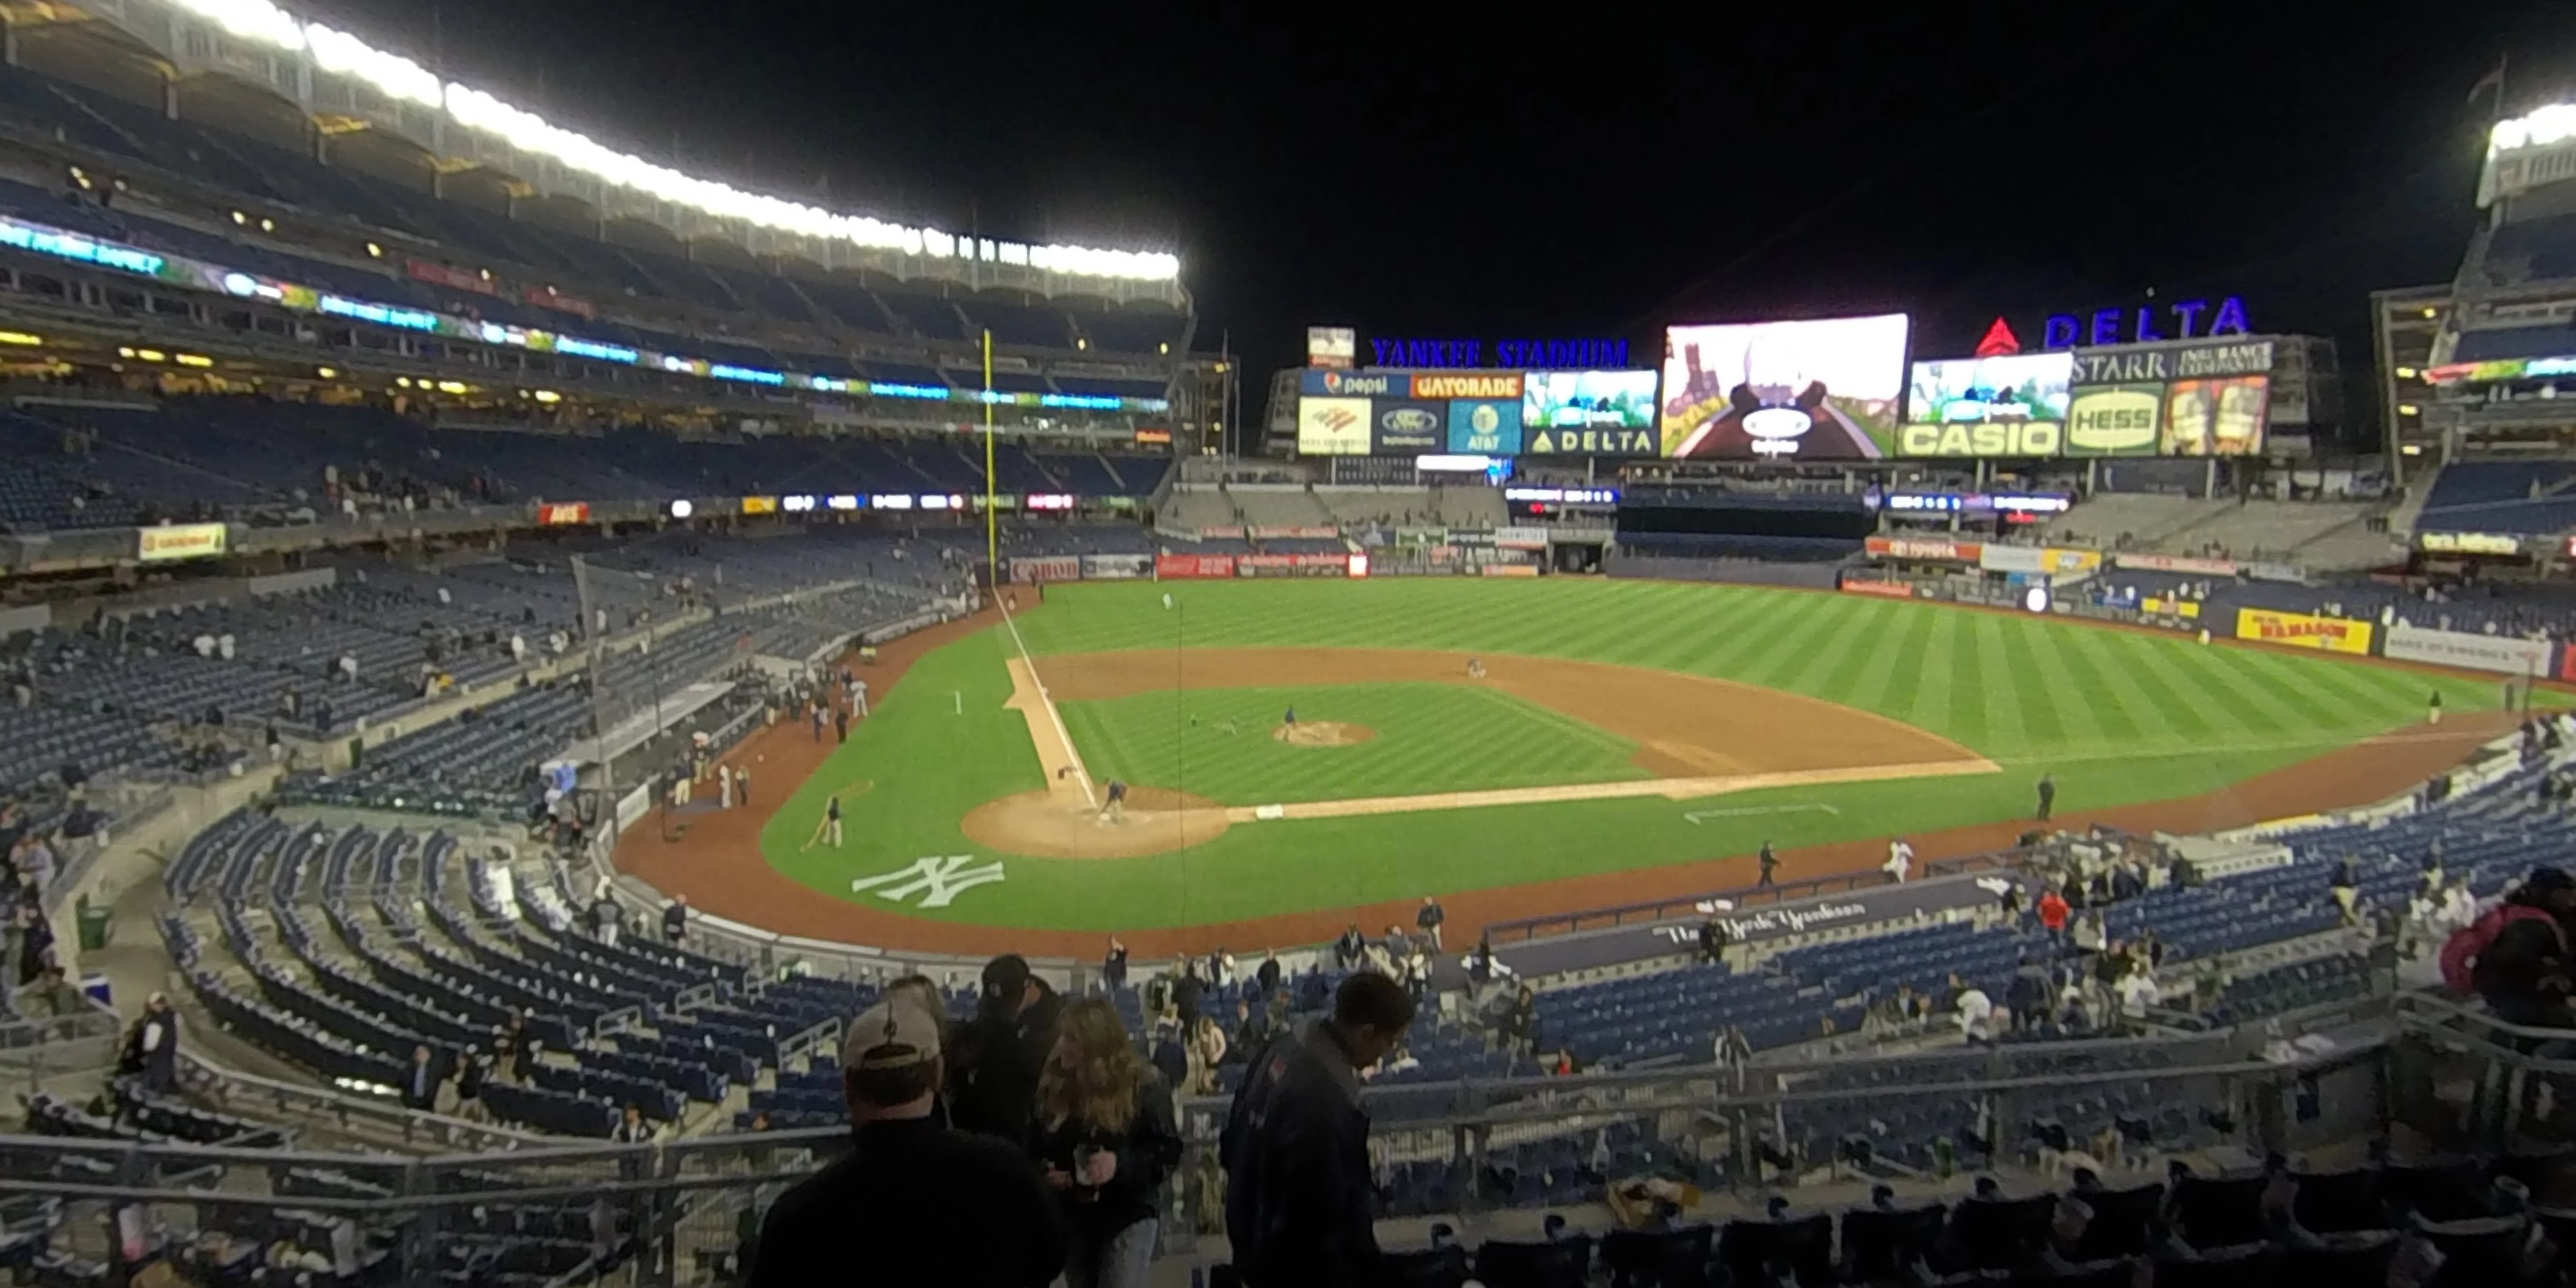 Section 218b At Yankee Stadium